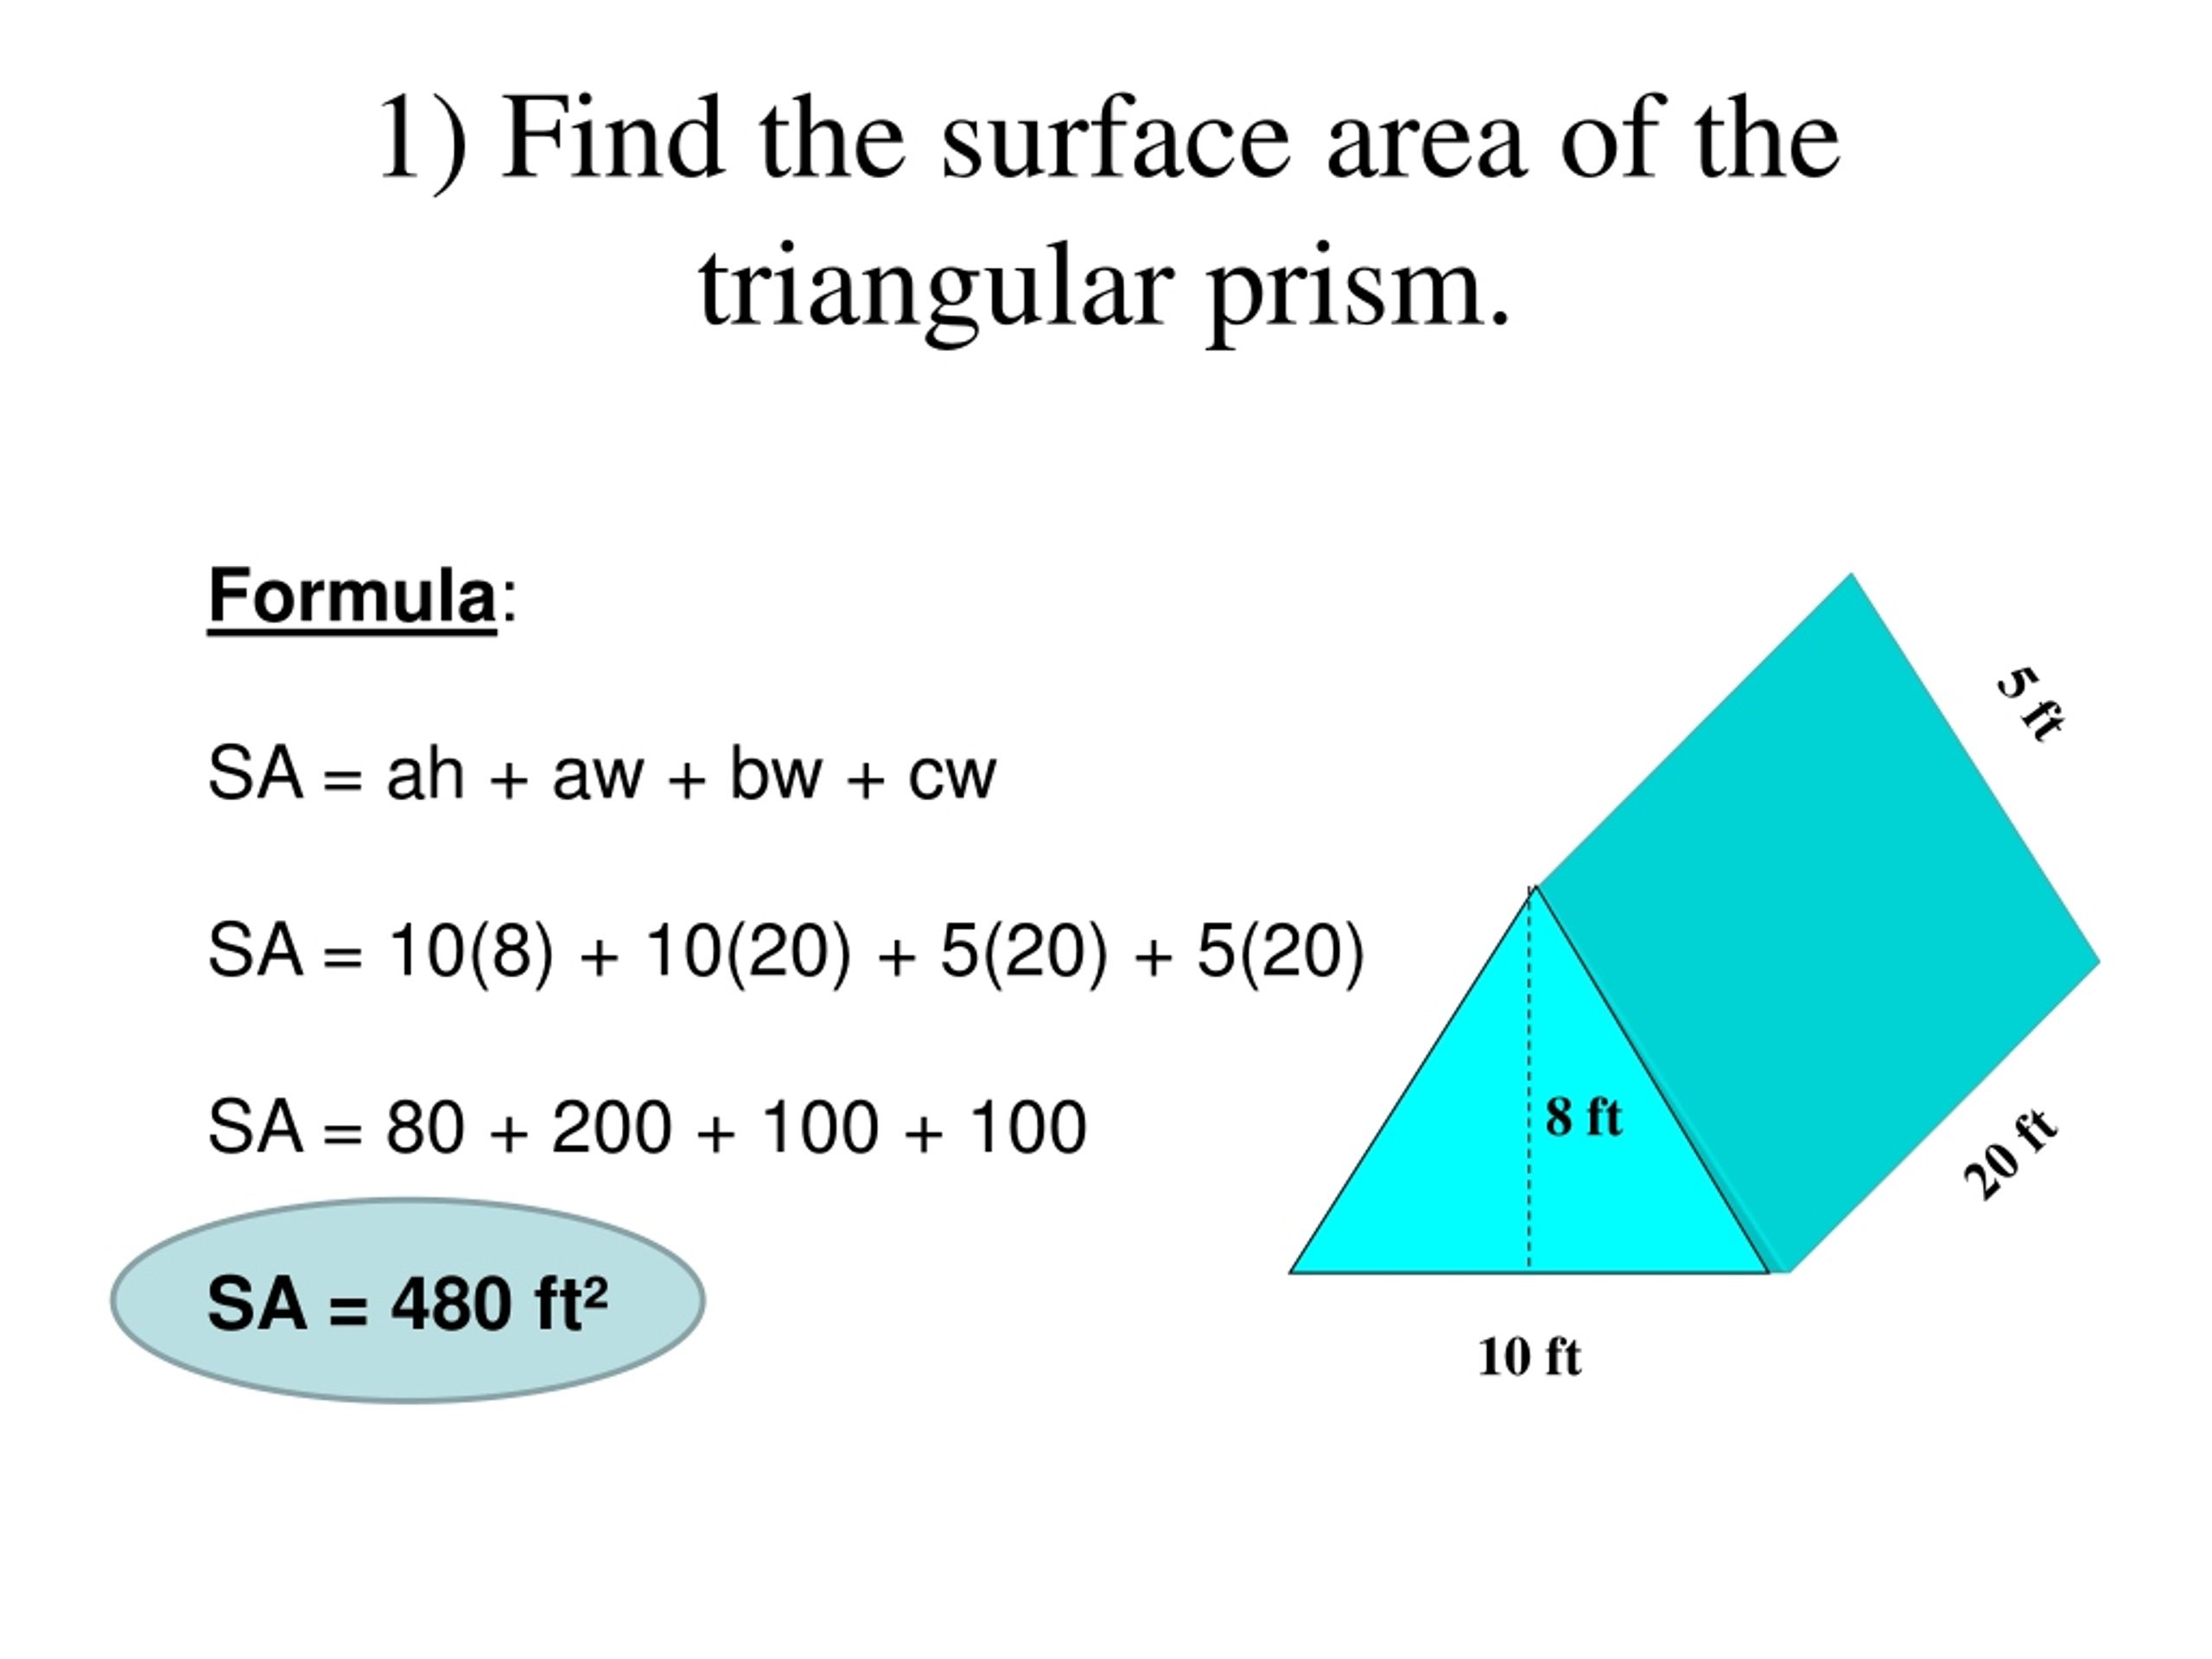 surface area for a triangular prism formula